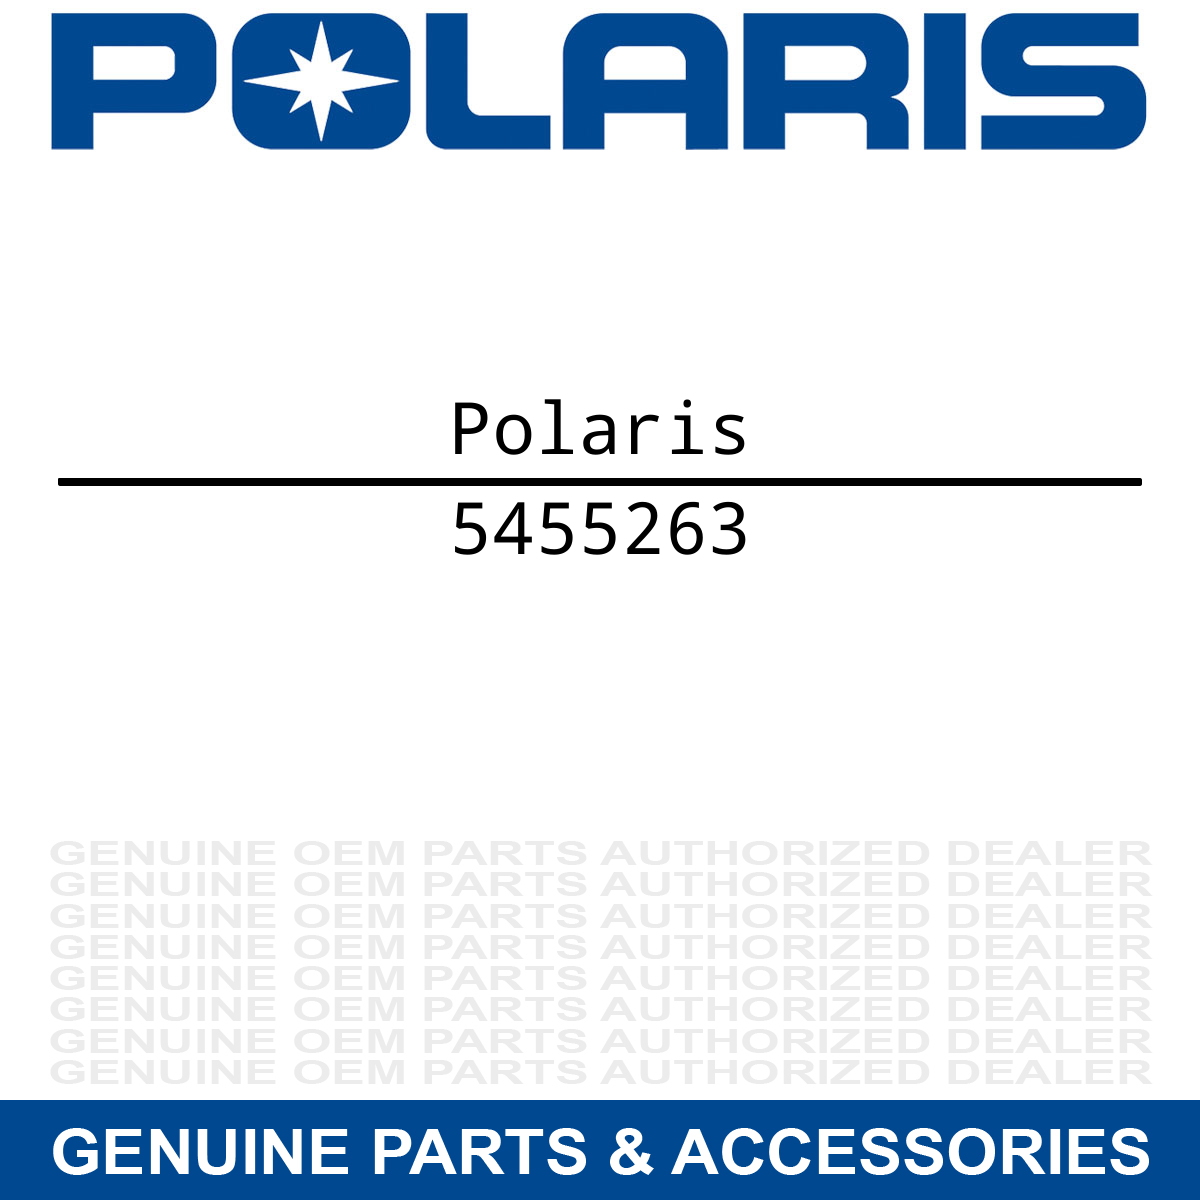 Polaris 5455263 Guide RZR 4 EPS S Turbo XP